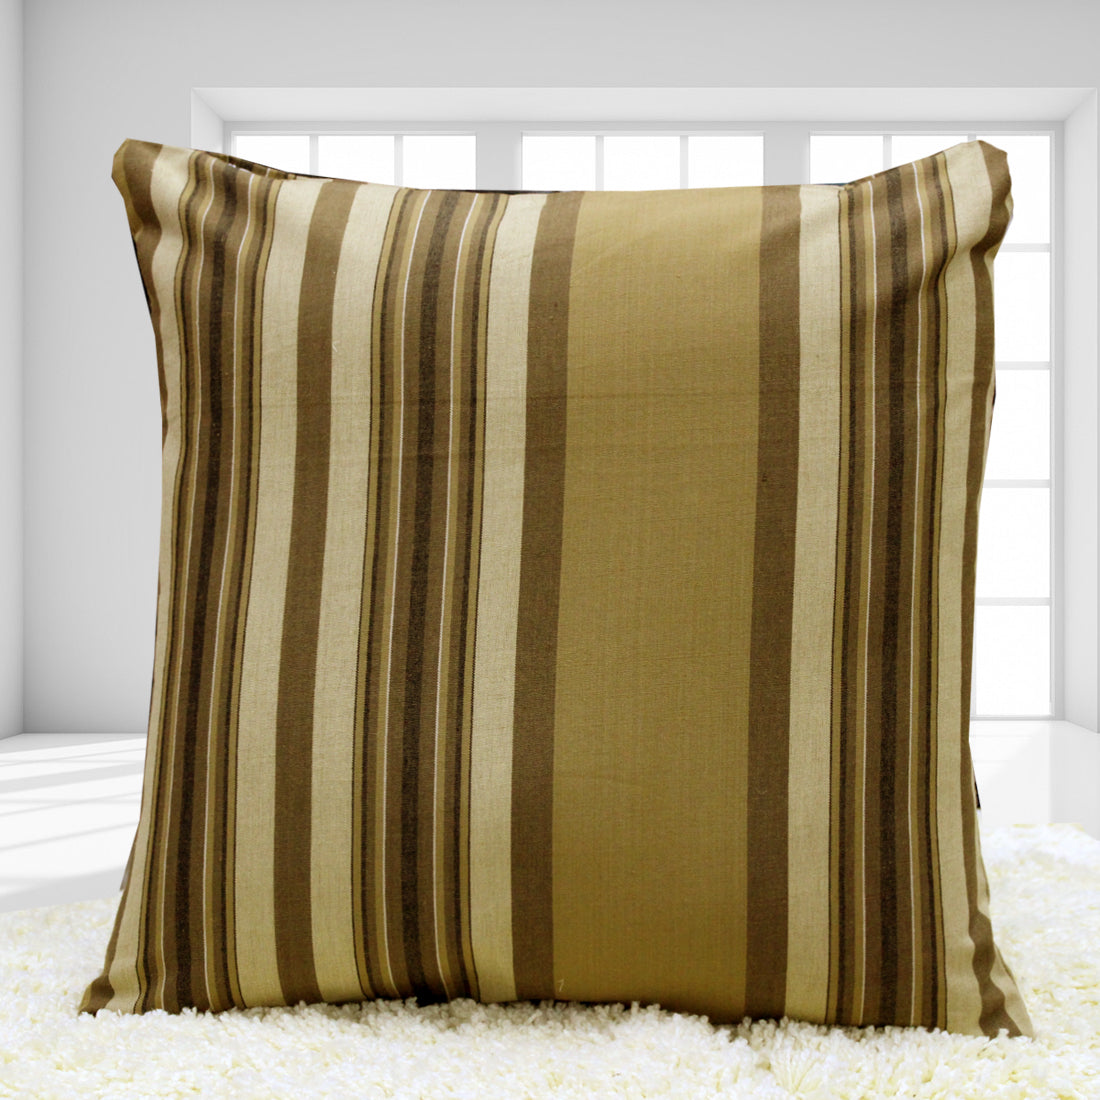 ALPHA Woven Cotton Stripes 2 Pcs Cushion Cover set - Brown